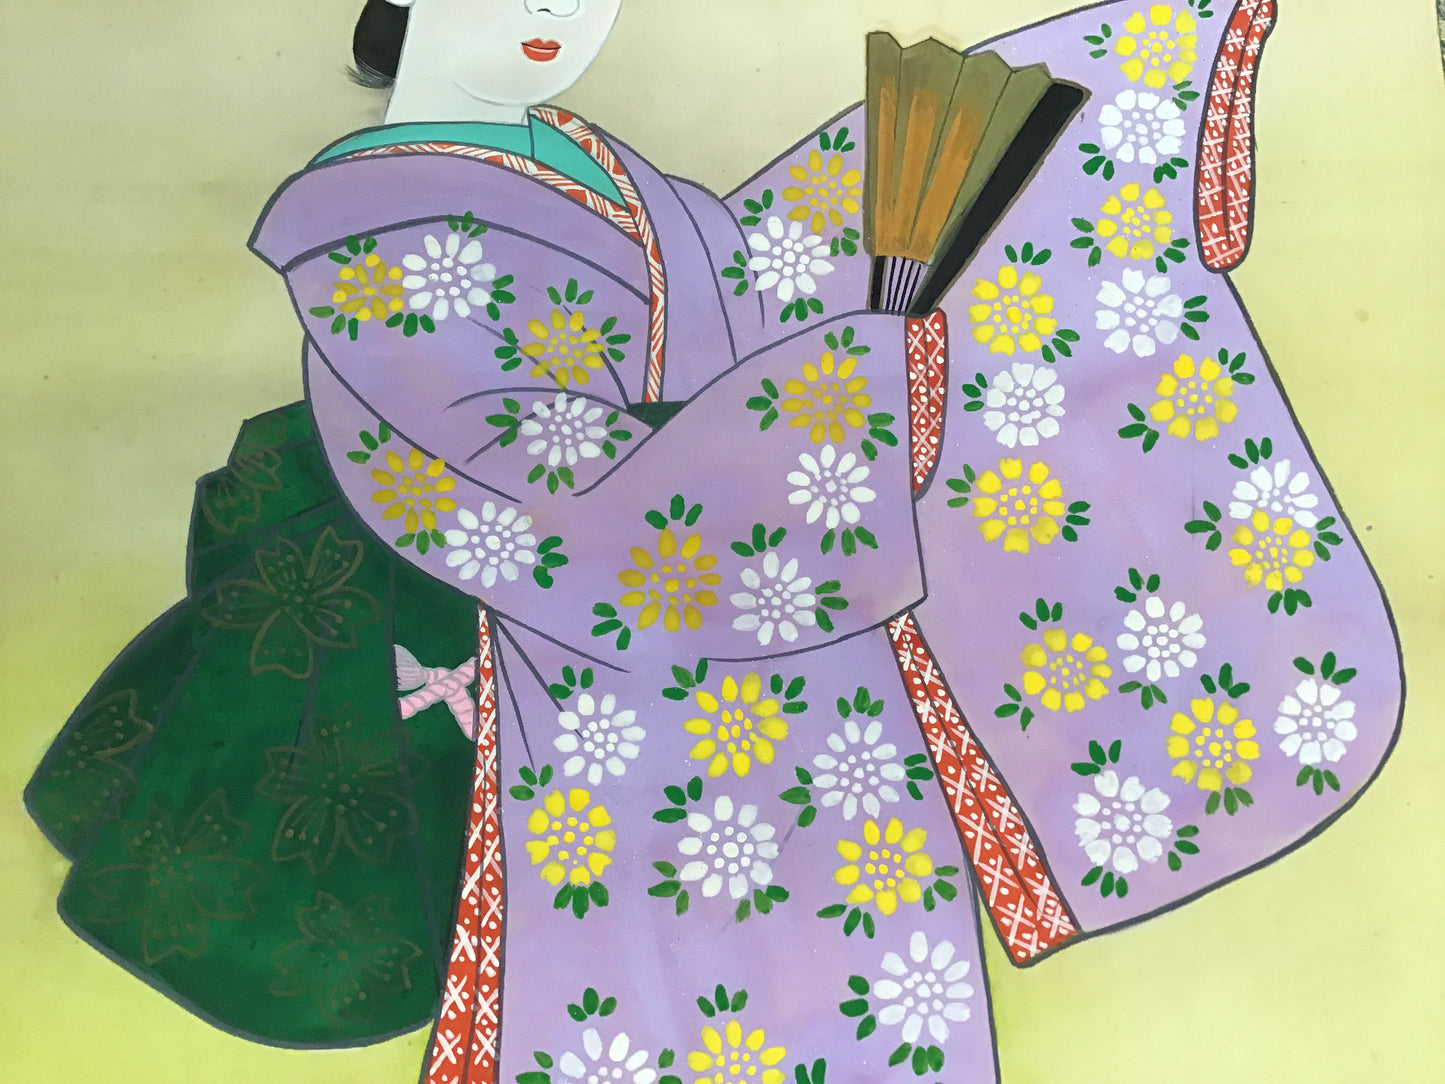 Y2186 KAKEJIKU Kimono Beauty dance 180x52cm Japanese hanging scroll interior